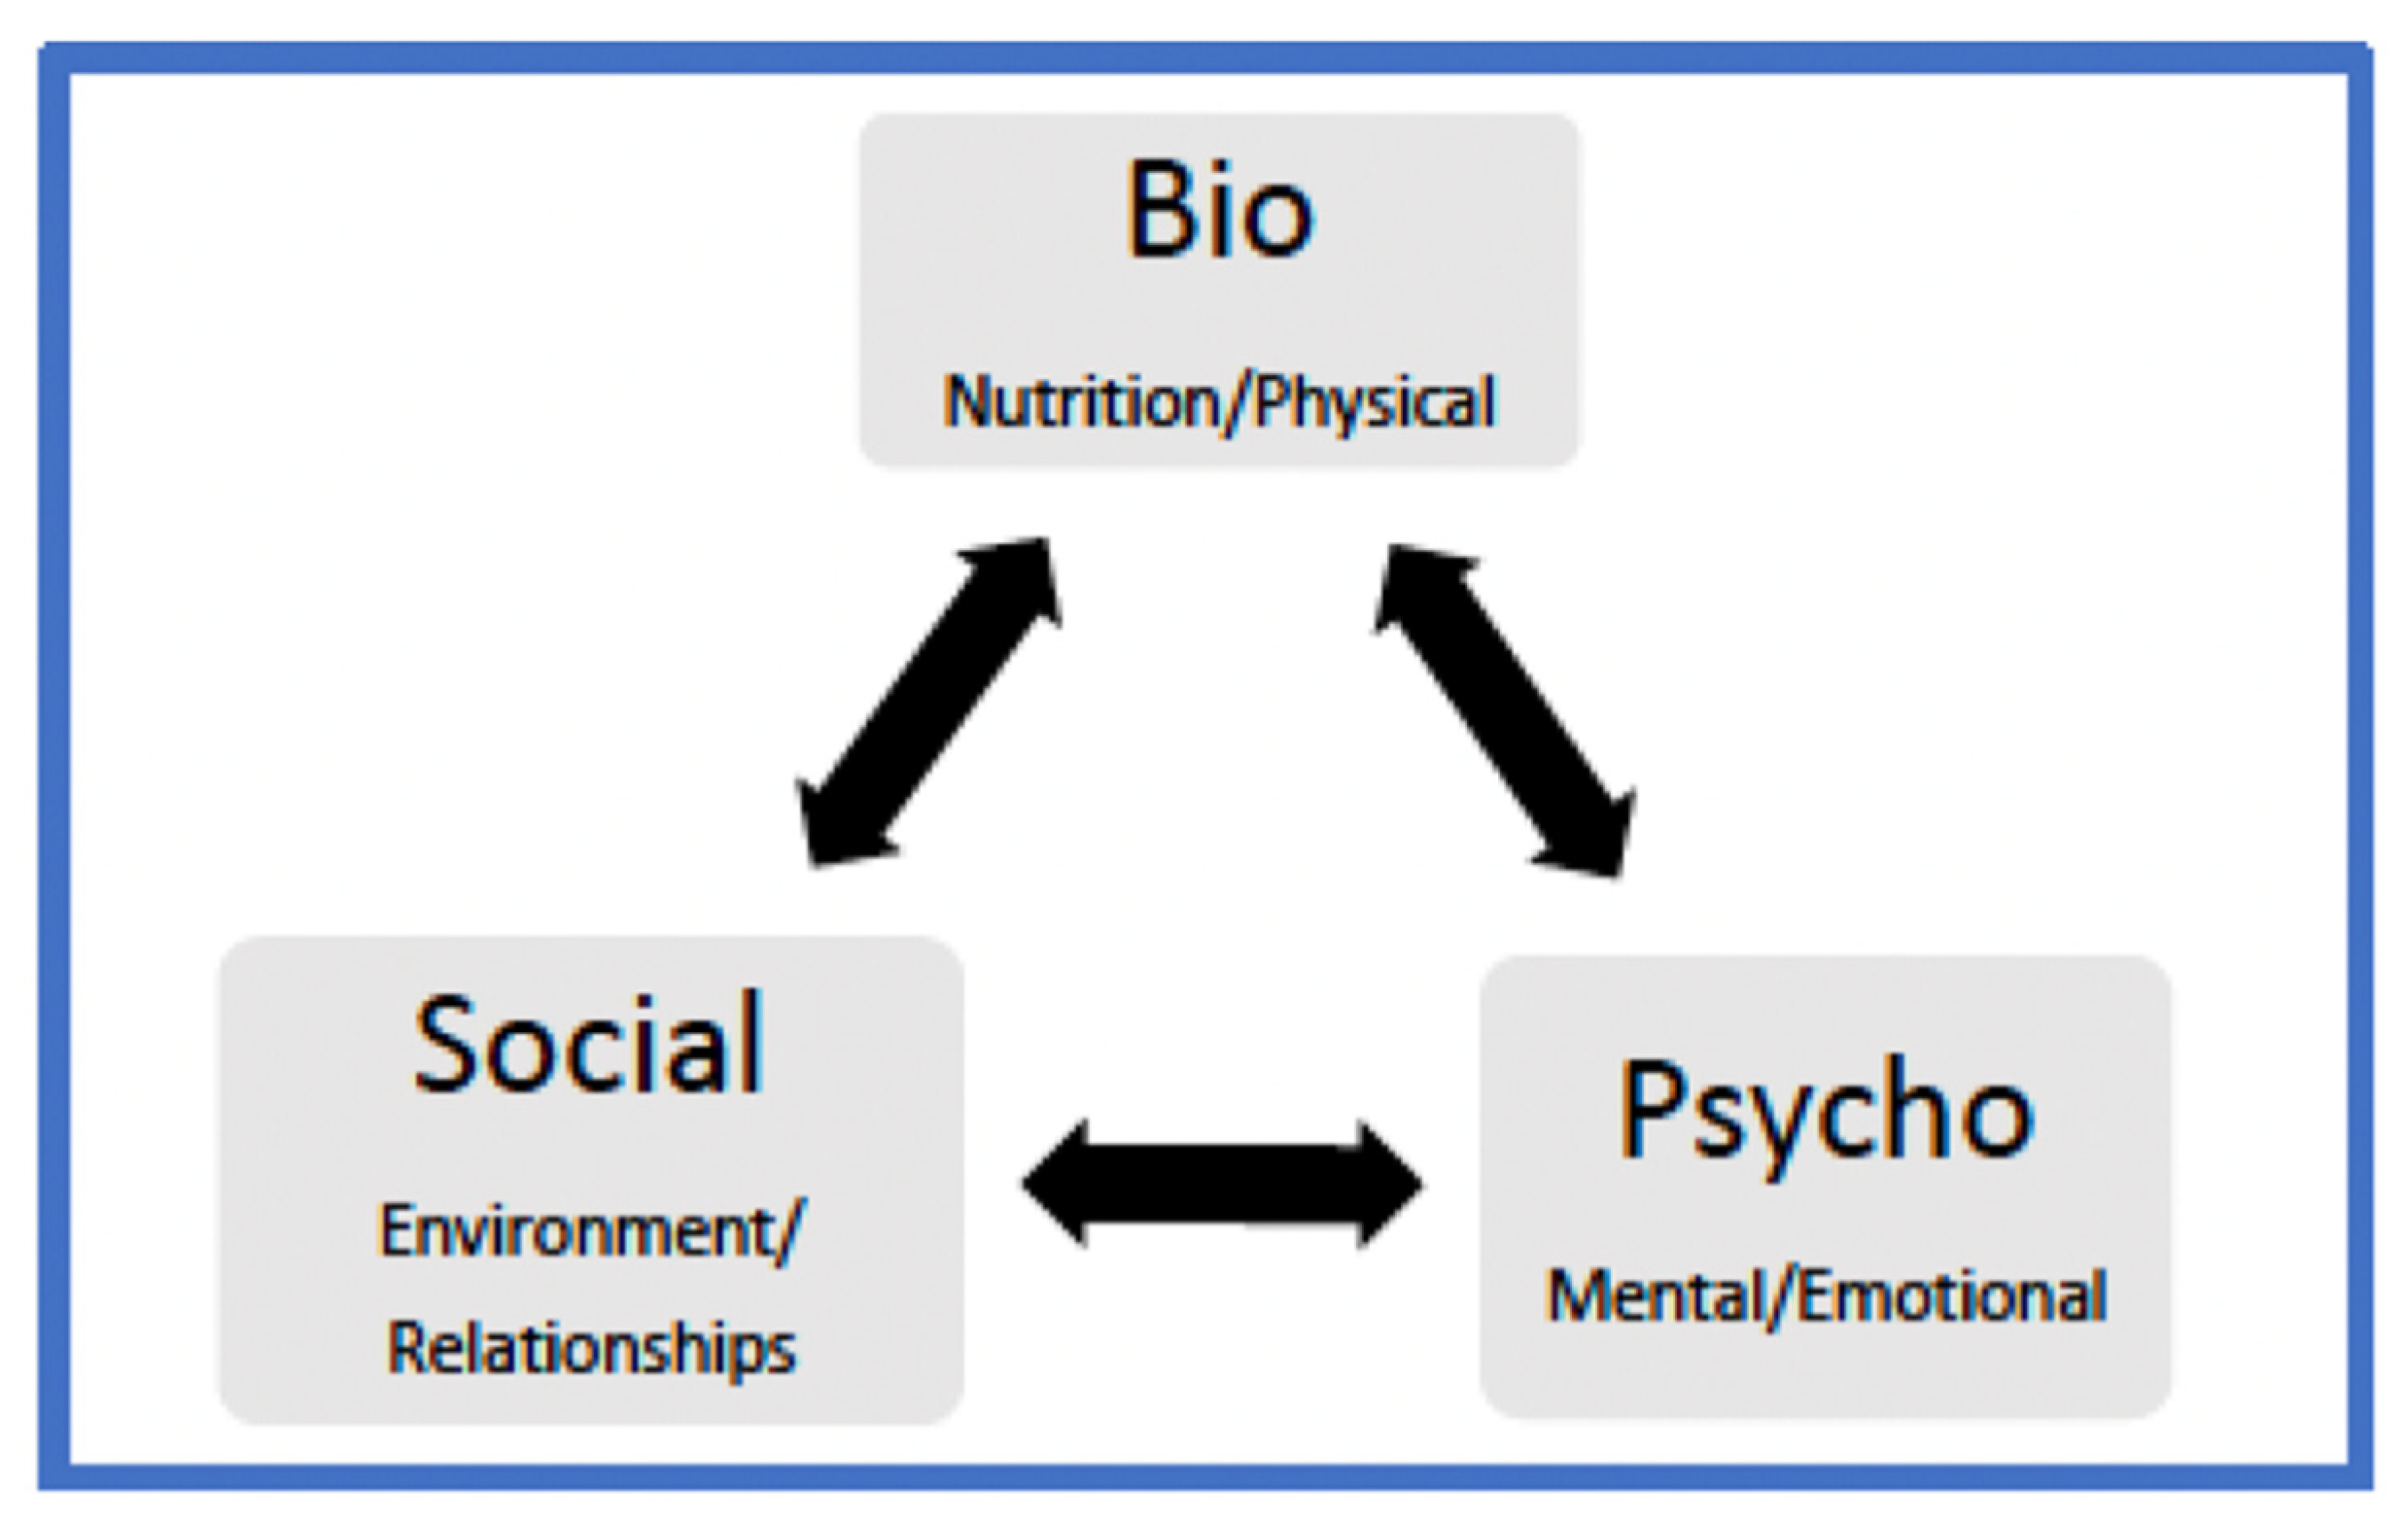 biopsychosocial assessment essay